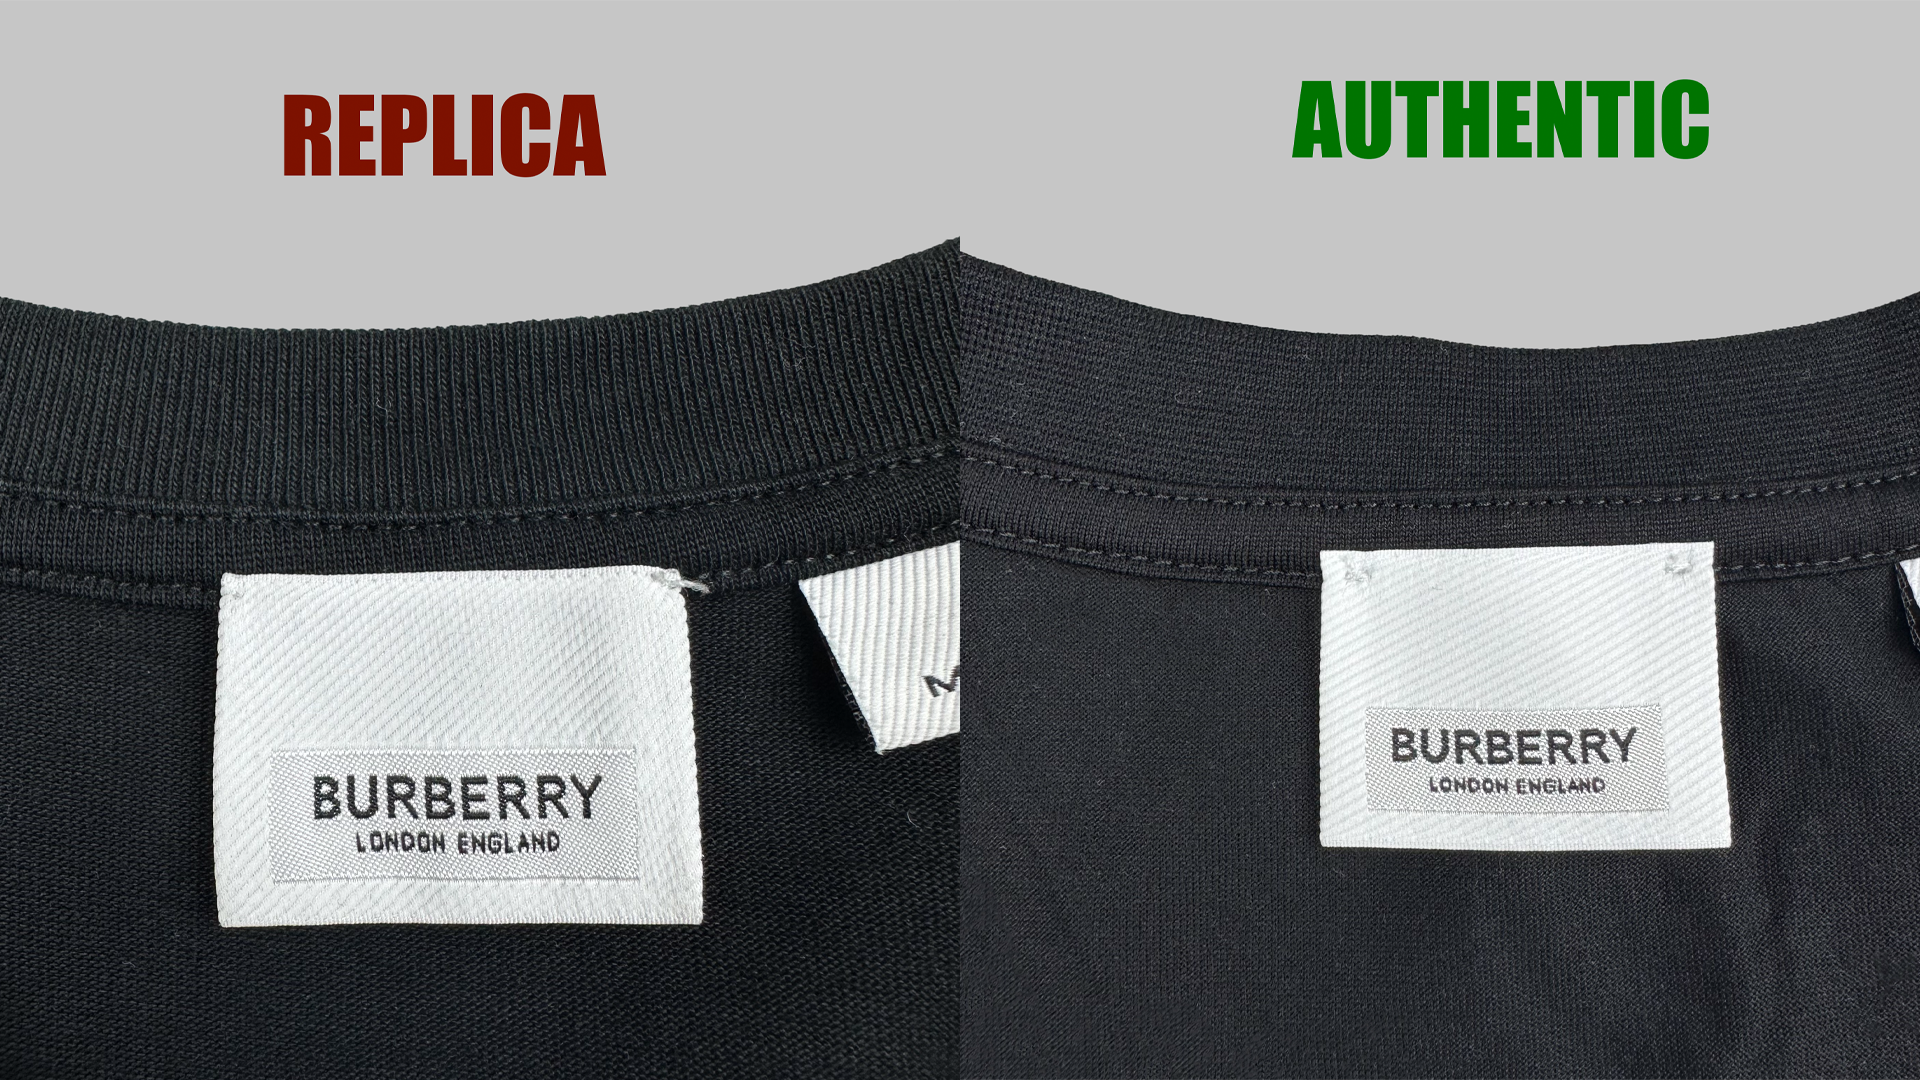 Authentic vs Replica Burberry neck label